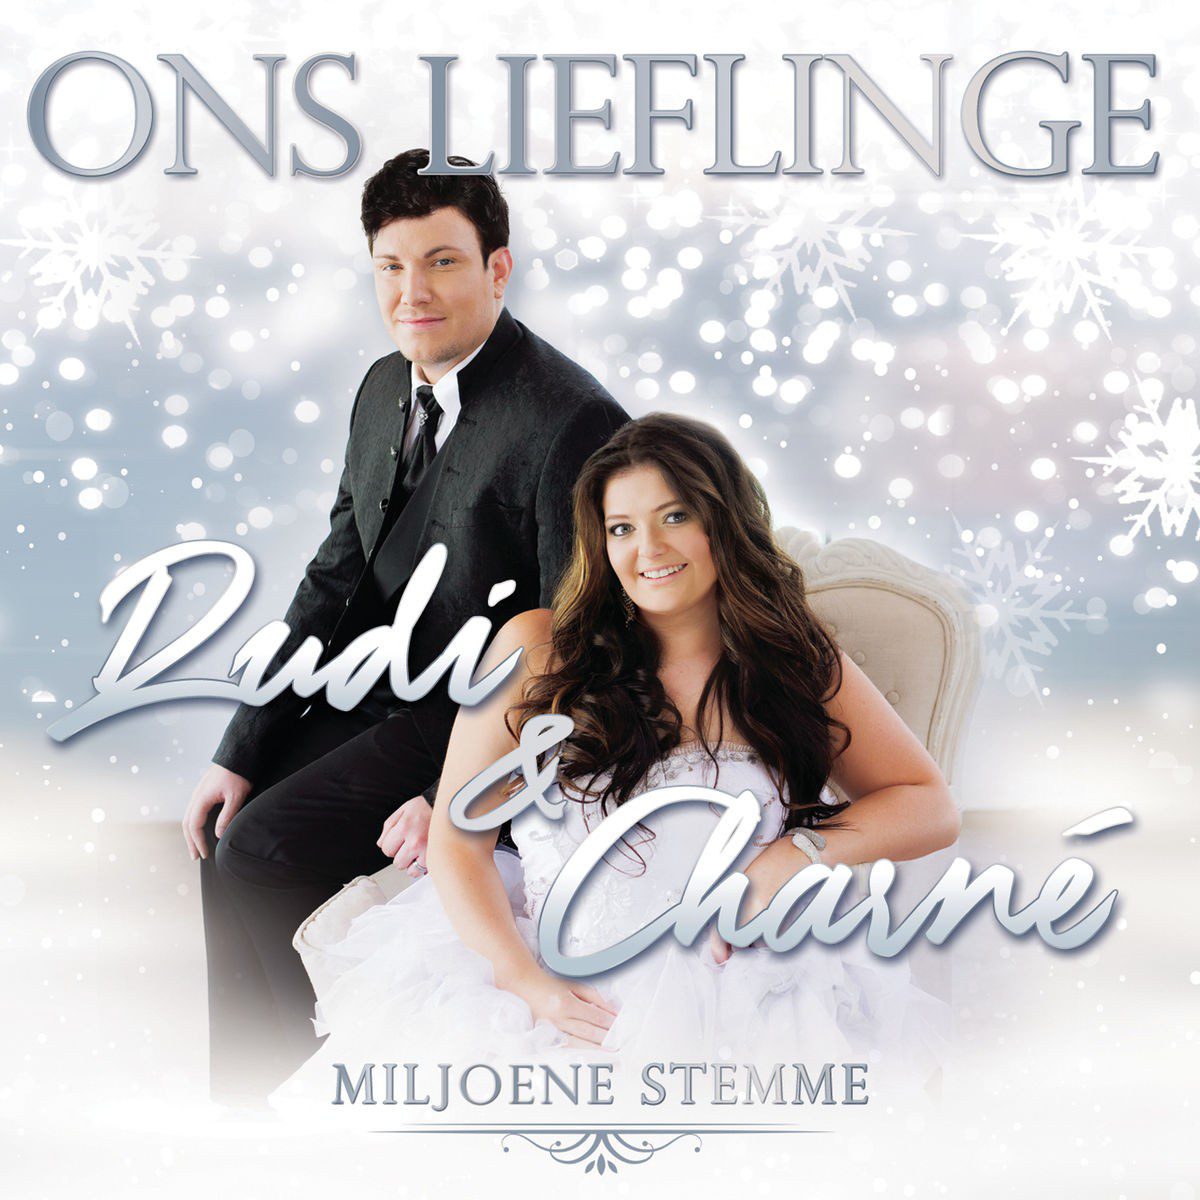 Rudi & Charne - Ons Lieflinge - Miljoene Stemme (CD)